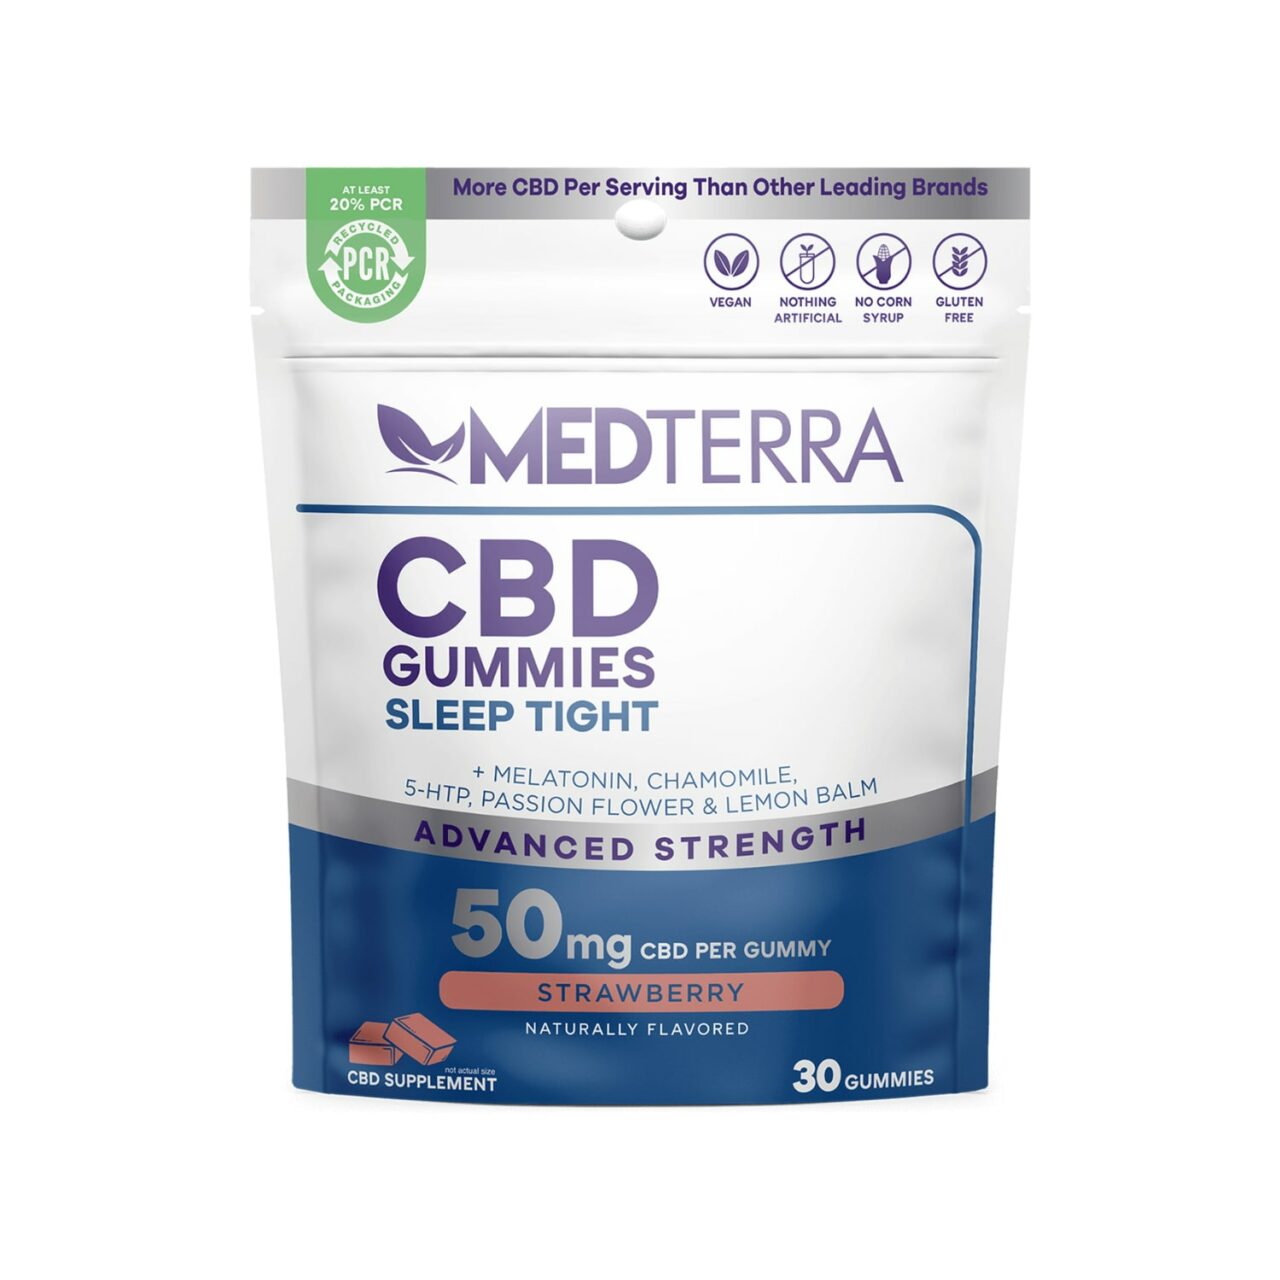 Medterra-CBD-Gummies-Sleep-Tight-Isolate-THC-Free-Strawbery-30ct-1500mg-CBD